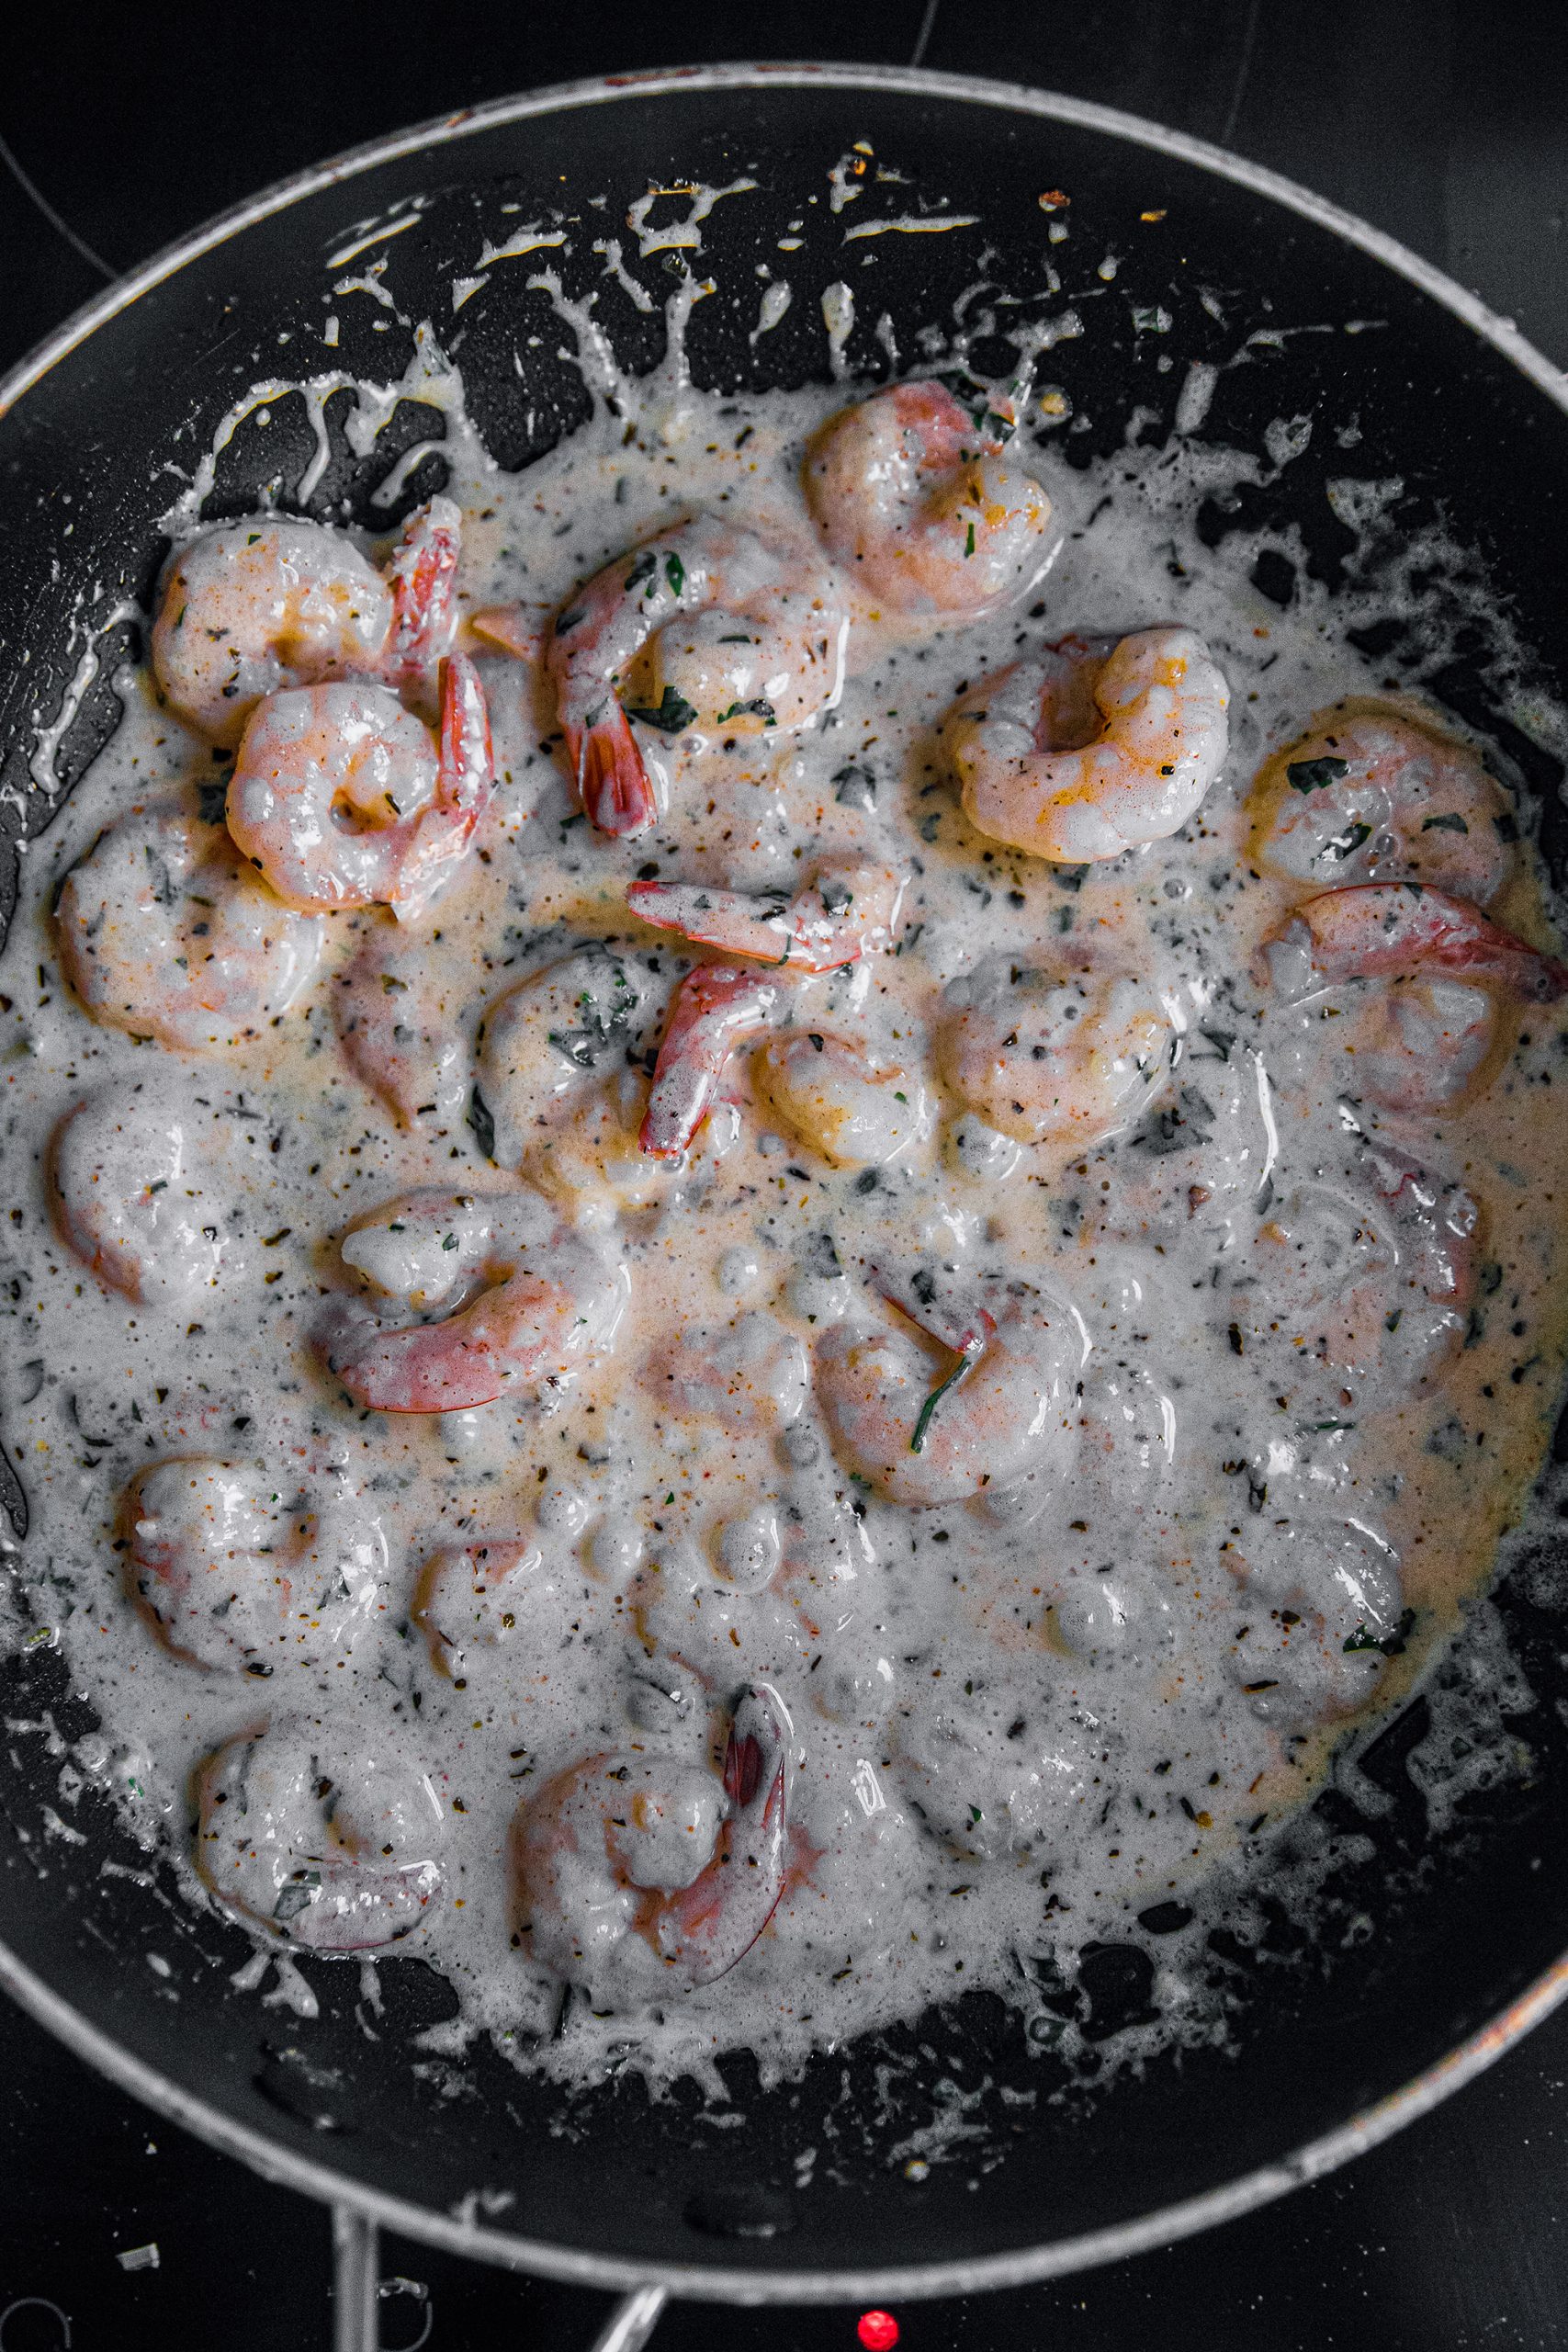 Toss shrimp to coat with sauce